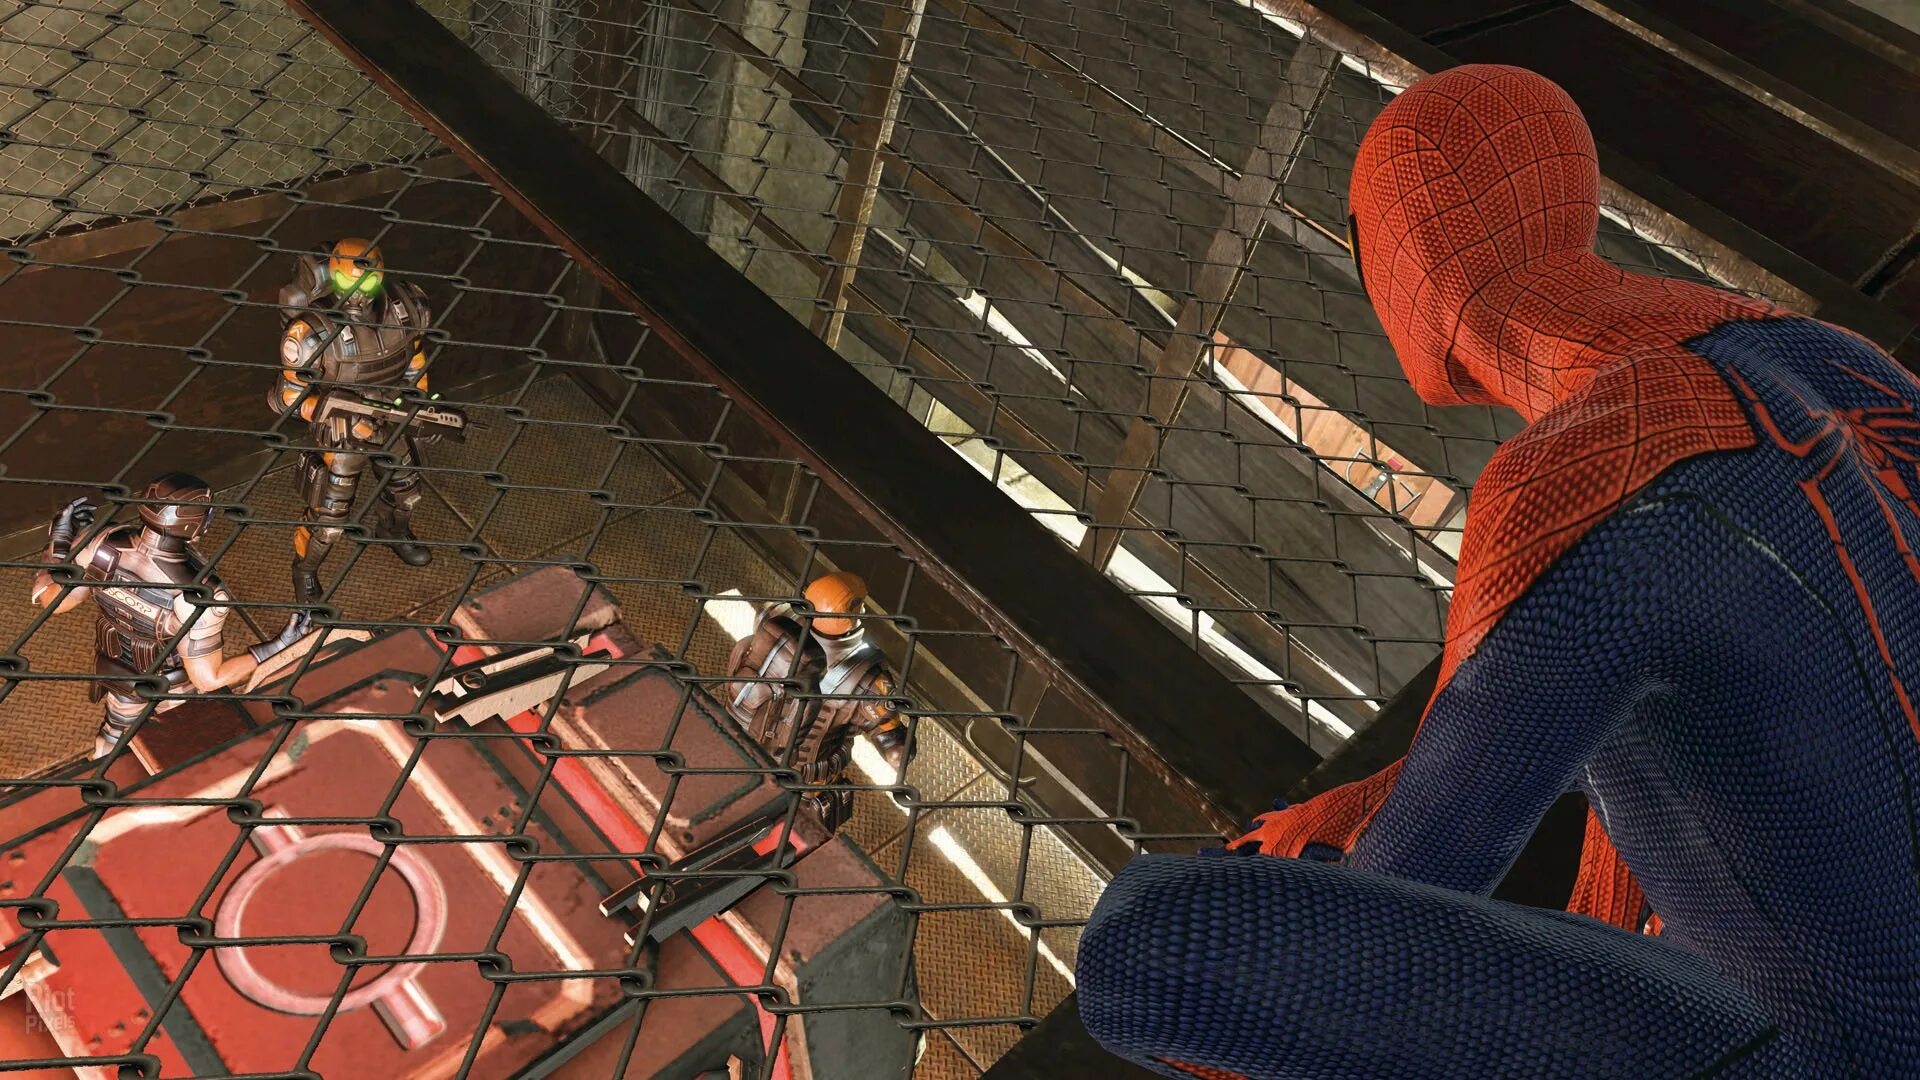 Настоящую игру человек паук. The amazing Spider-man (игра, 2012). The amazing Spider-man 2 (игра, 2014). Человек паук игра 2012. Spider-man 3 (игра).